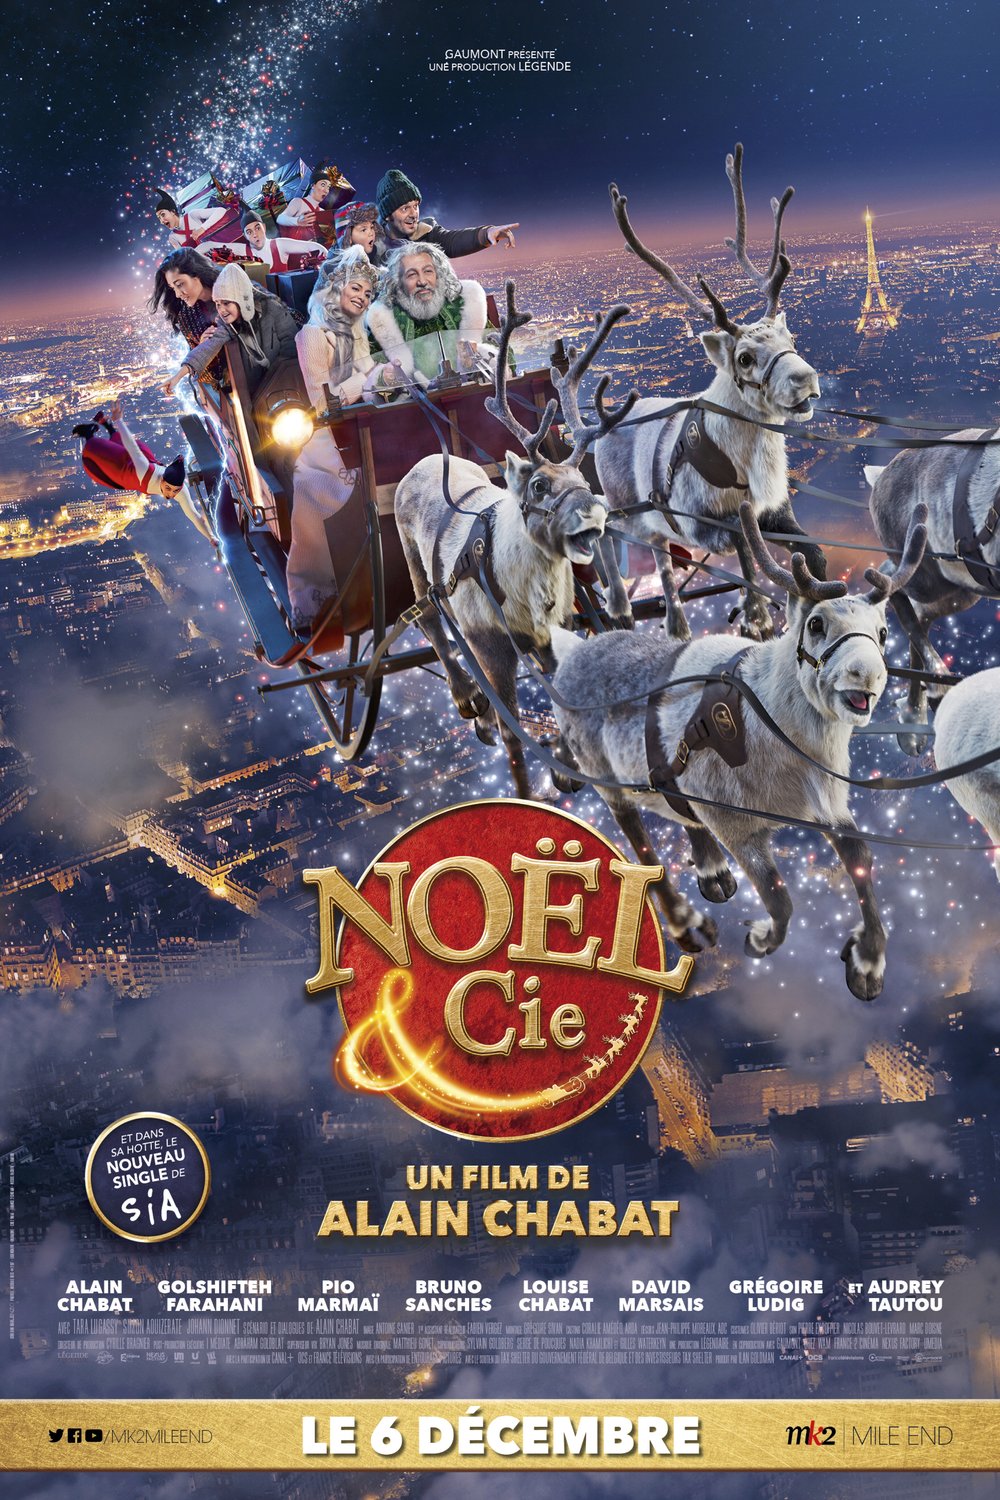 Poster of the movie Noël & Cie